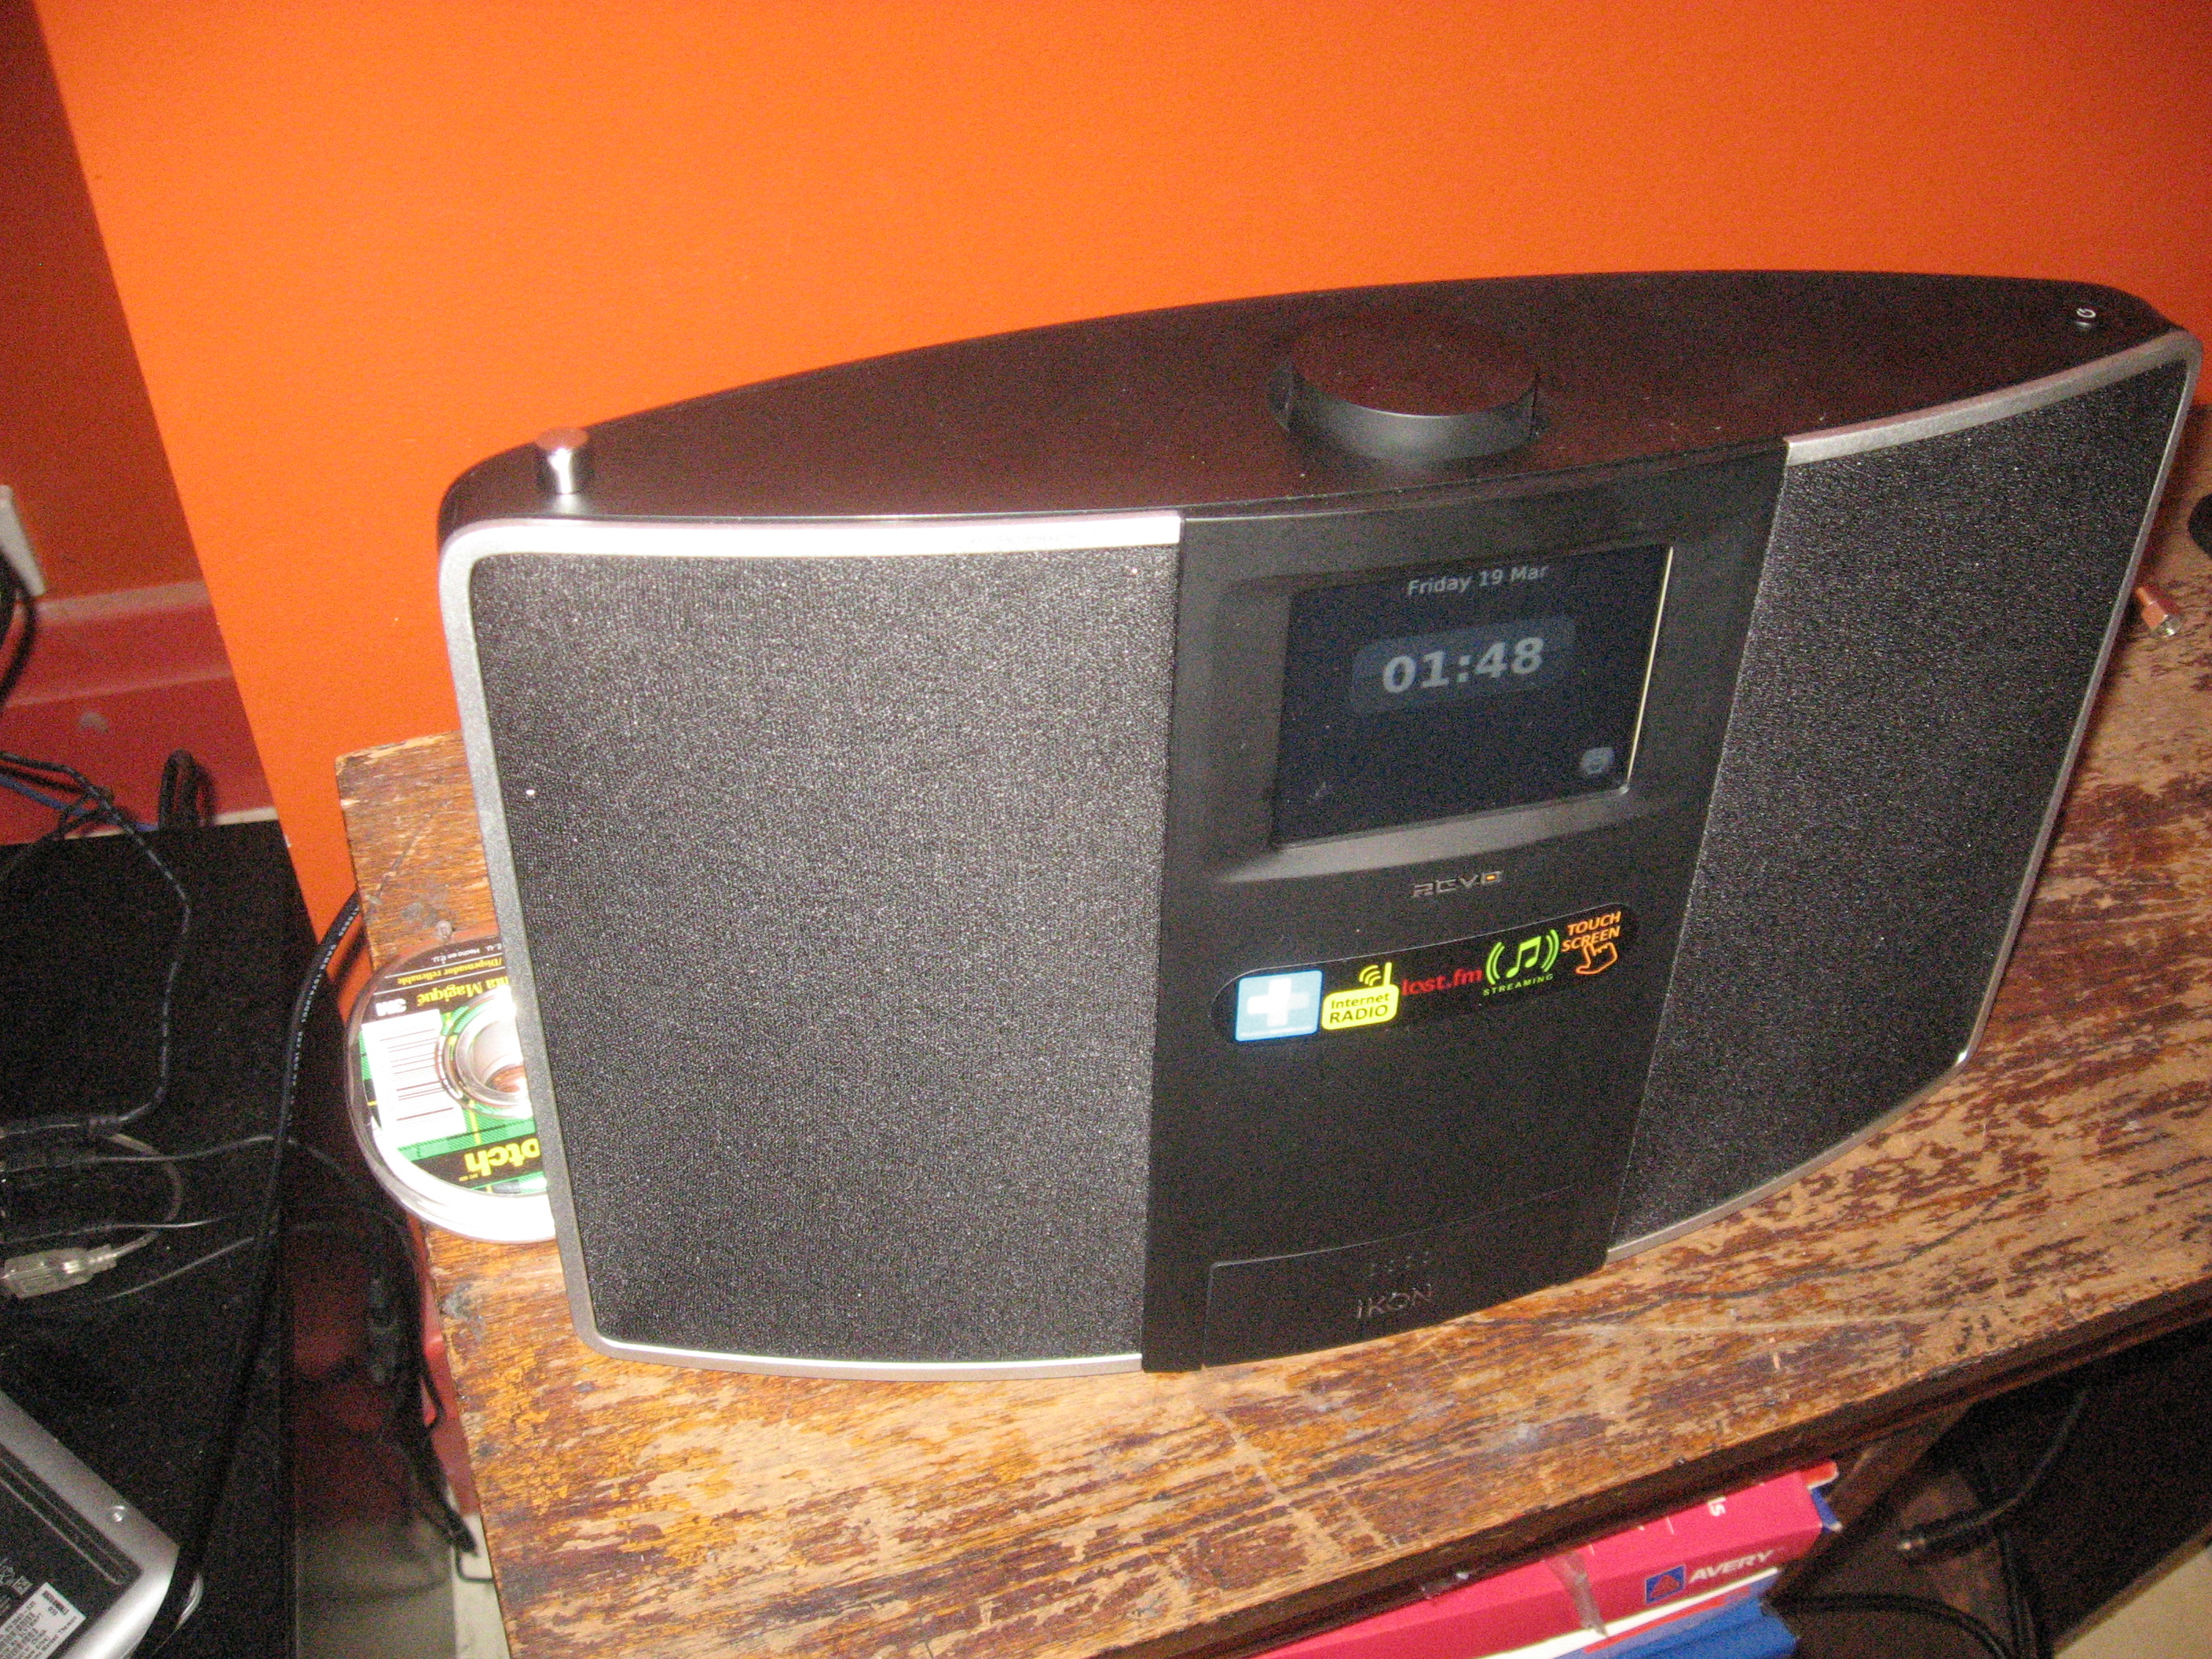 Product Review – Revo IKON stereo table Internet radio (Frontier Internet Radio platform)